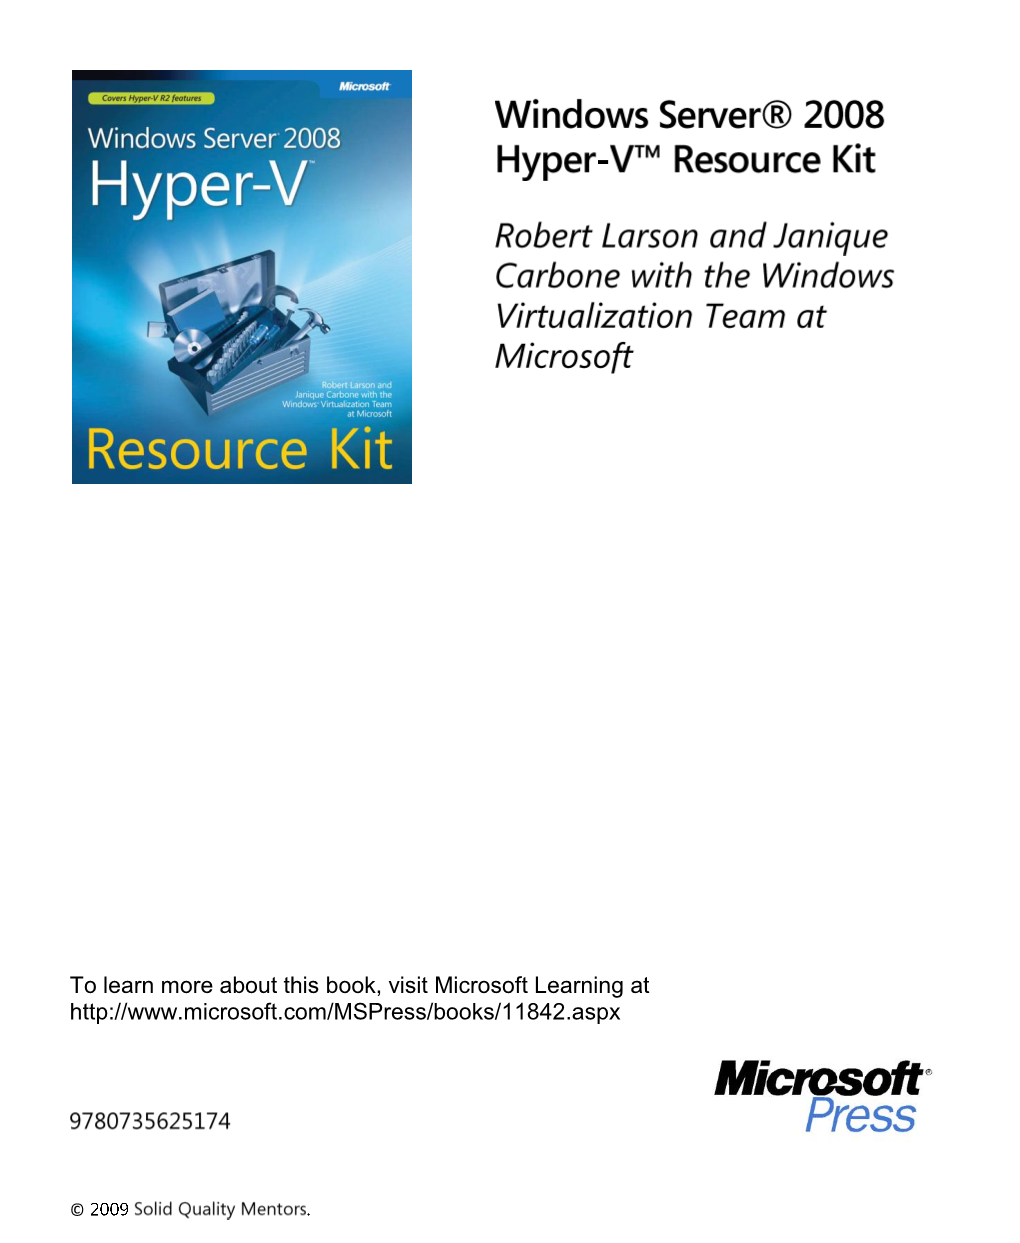 Windows Server 2008 Hyper-V Resource